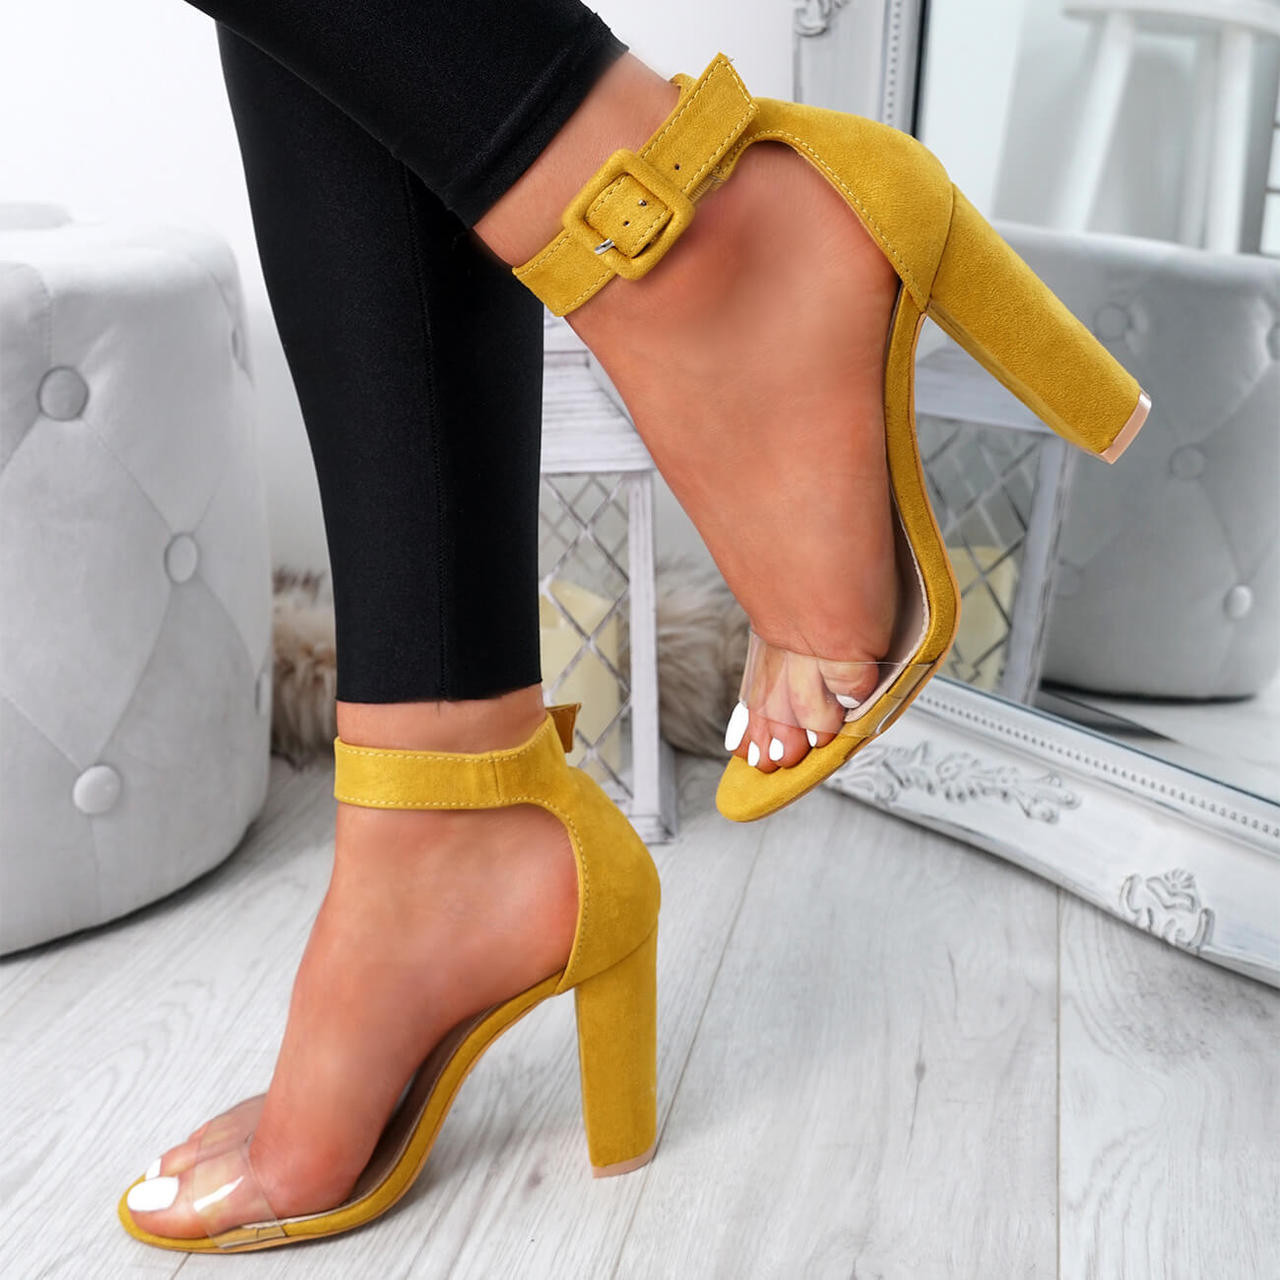 yellow block shoes